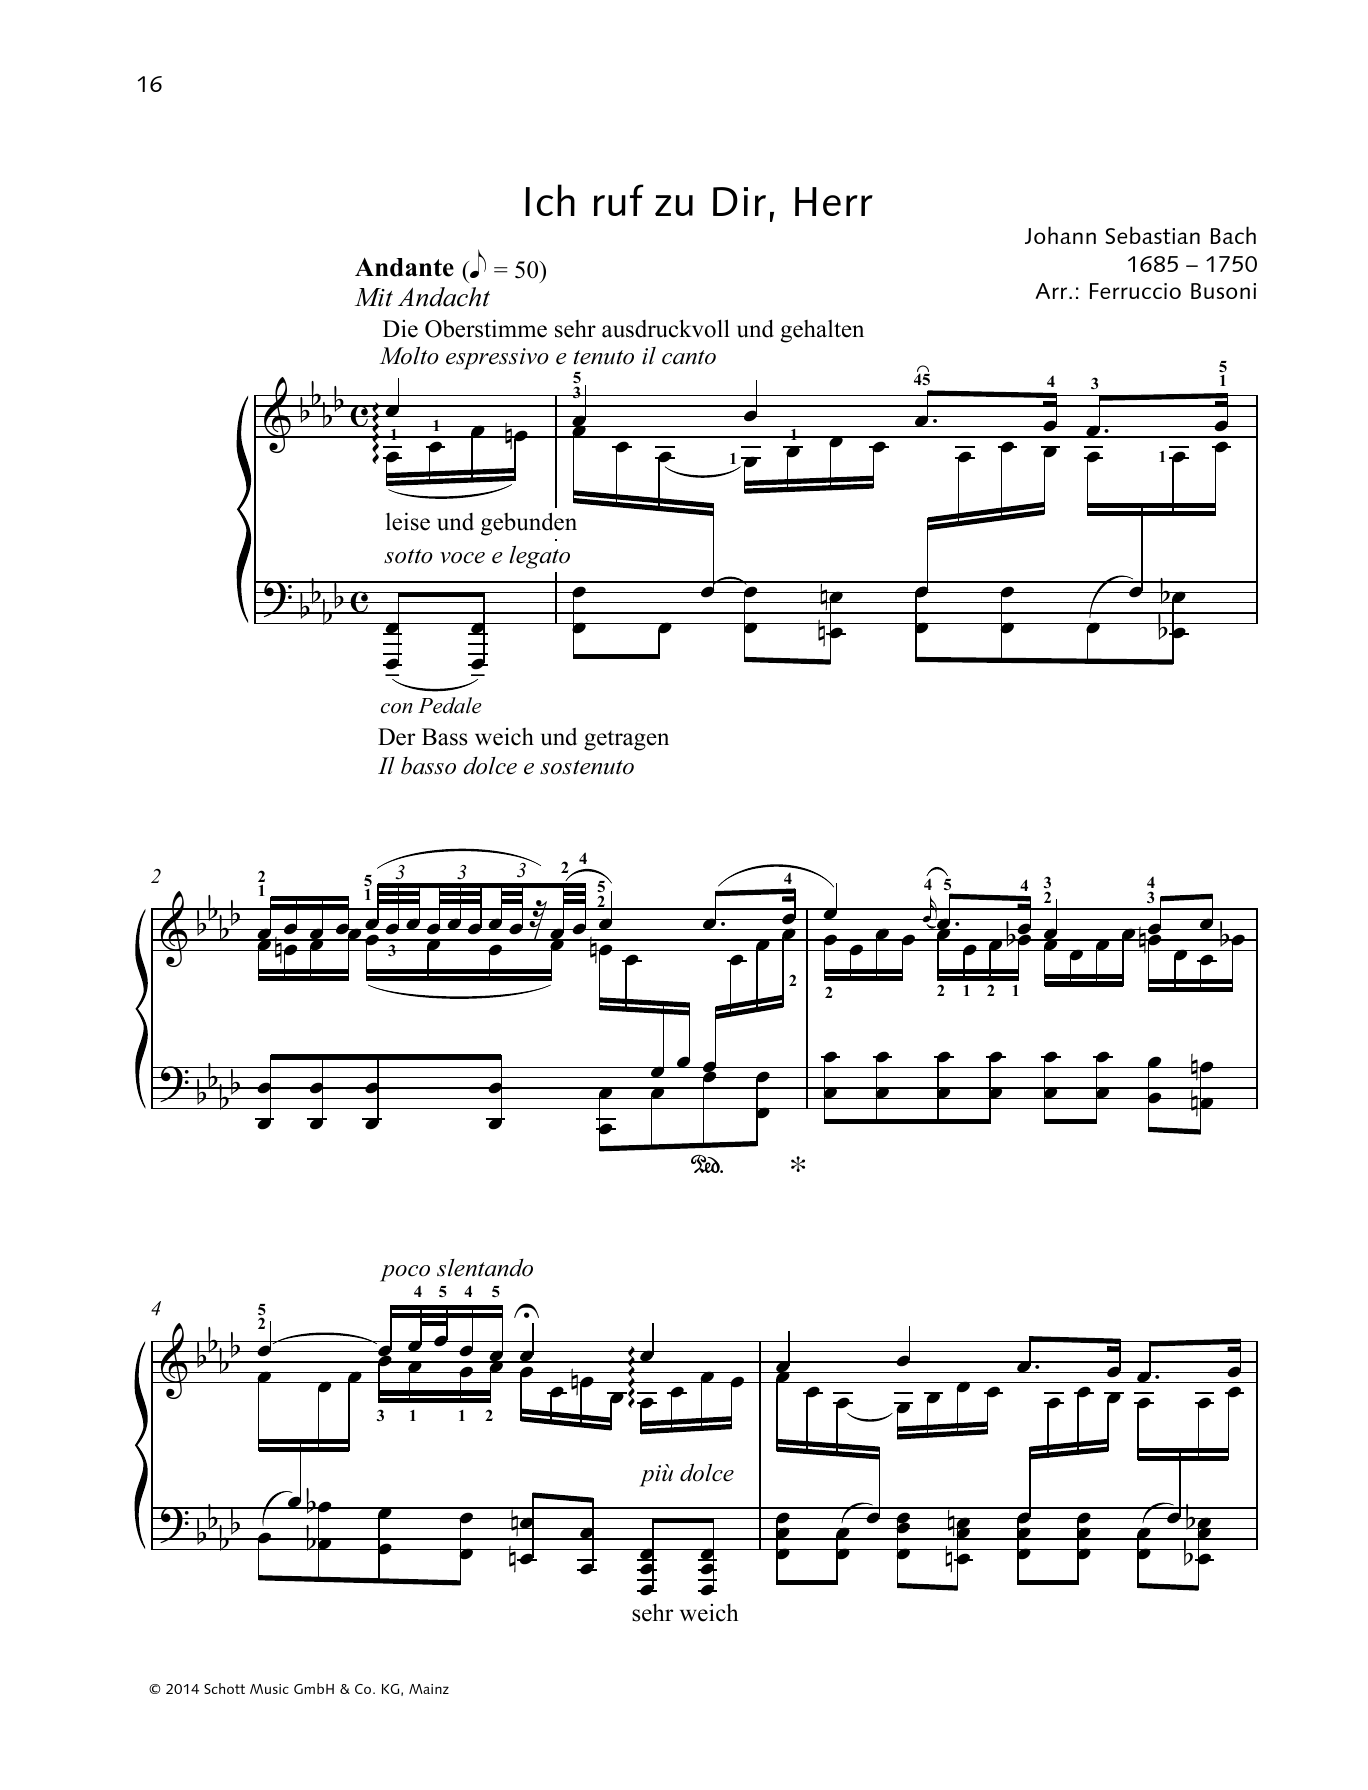 Download Johann Sebastian Bach Ich ruf zu Dir, Herr Sheet Music and learn how to play Piano Solo PDF digital score in minutes